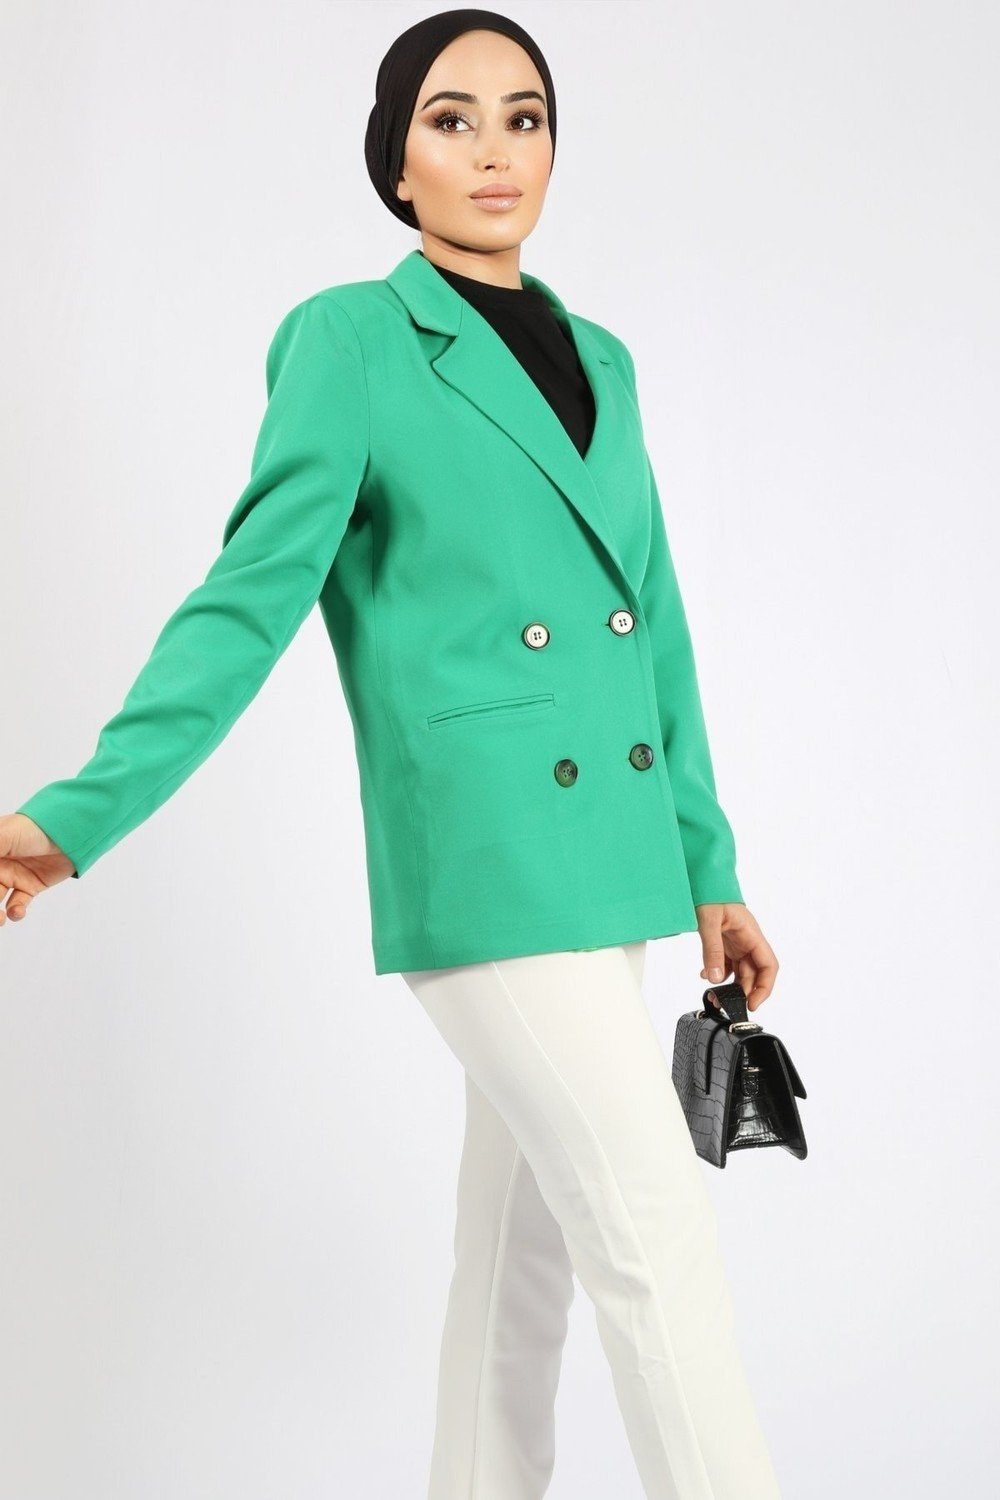 HAKKE Pointed Collar Jacket with Fleece Pocket